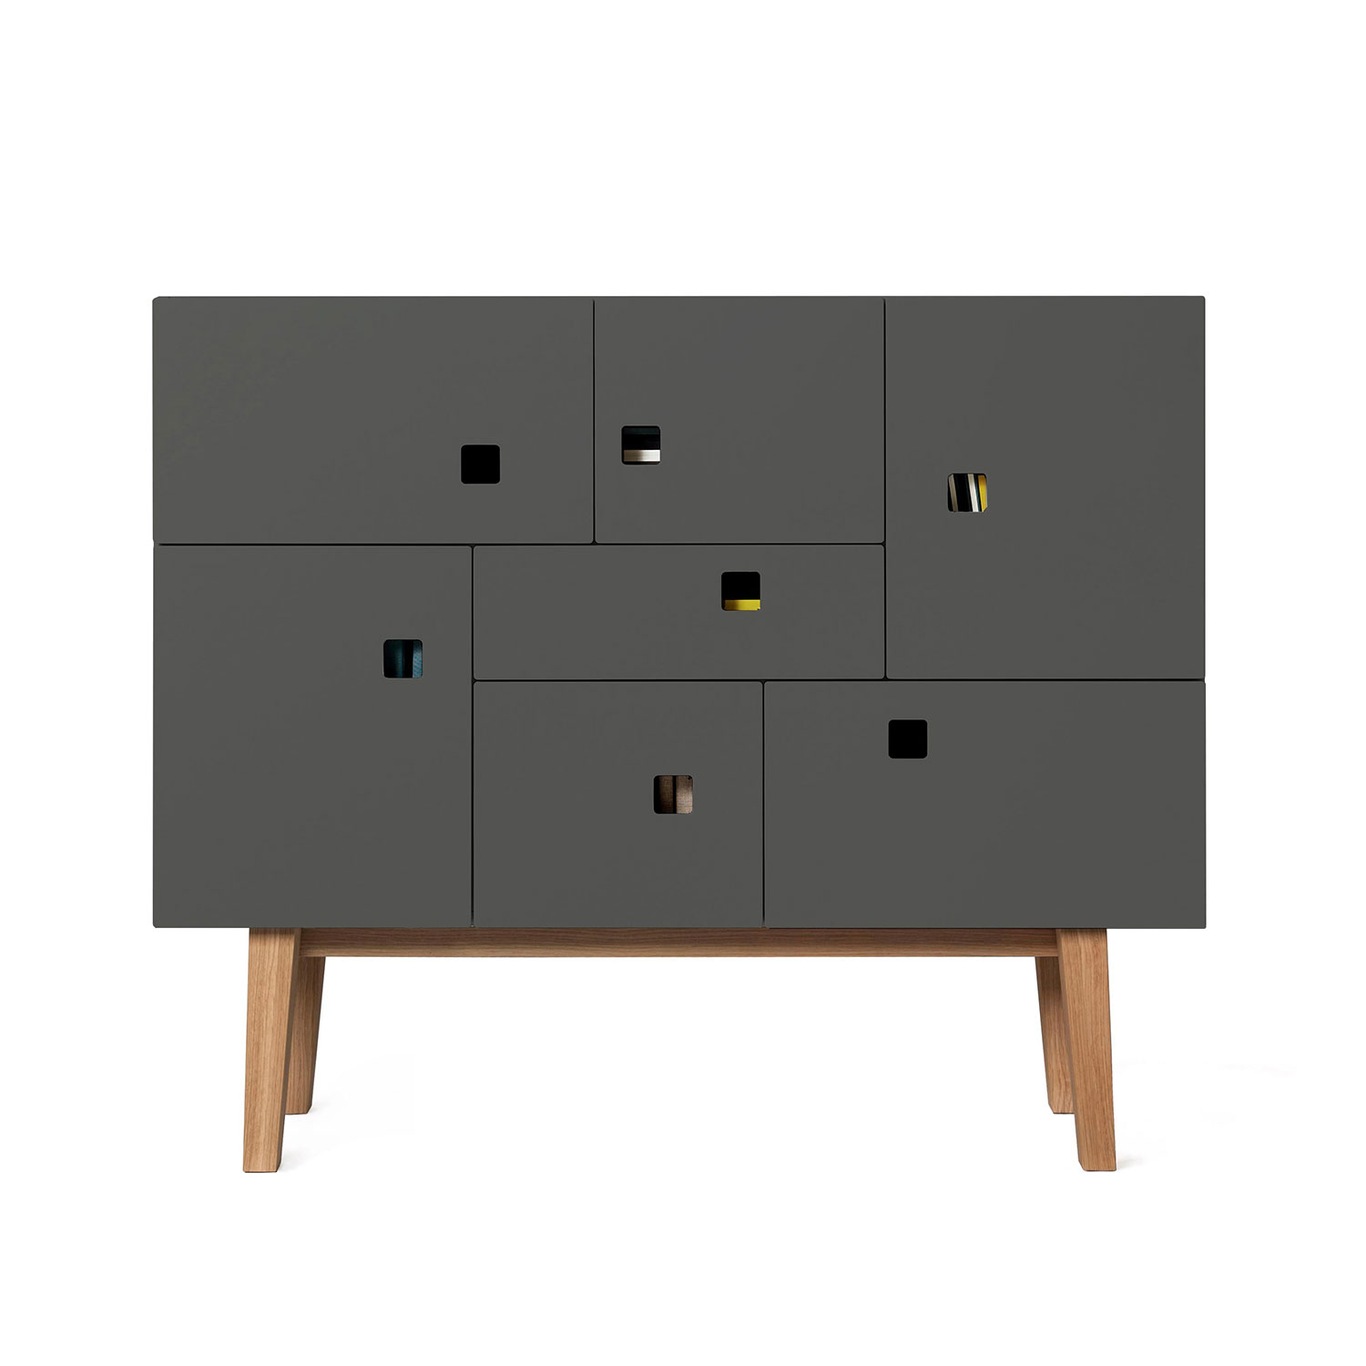 Peep C1 Multi-Purpose Cabinet, Slate Grey/Ek Retro